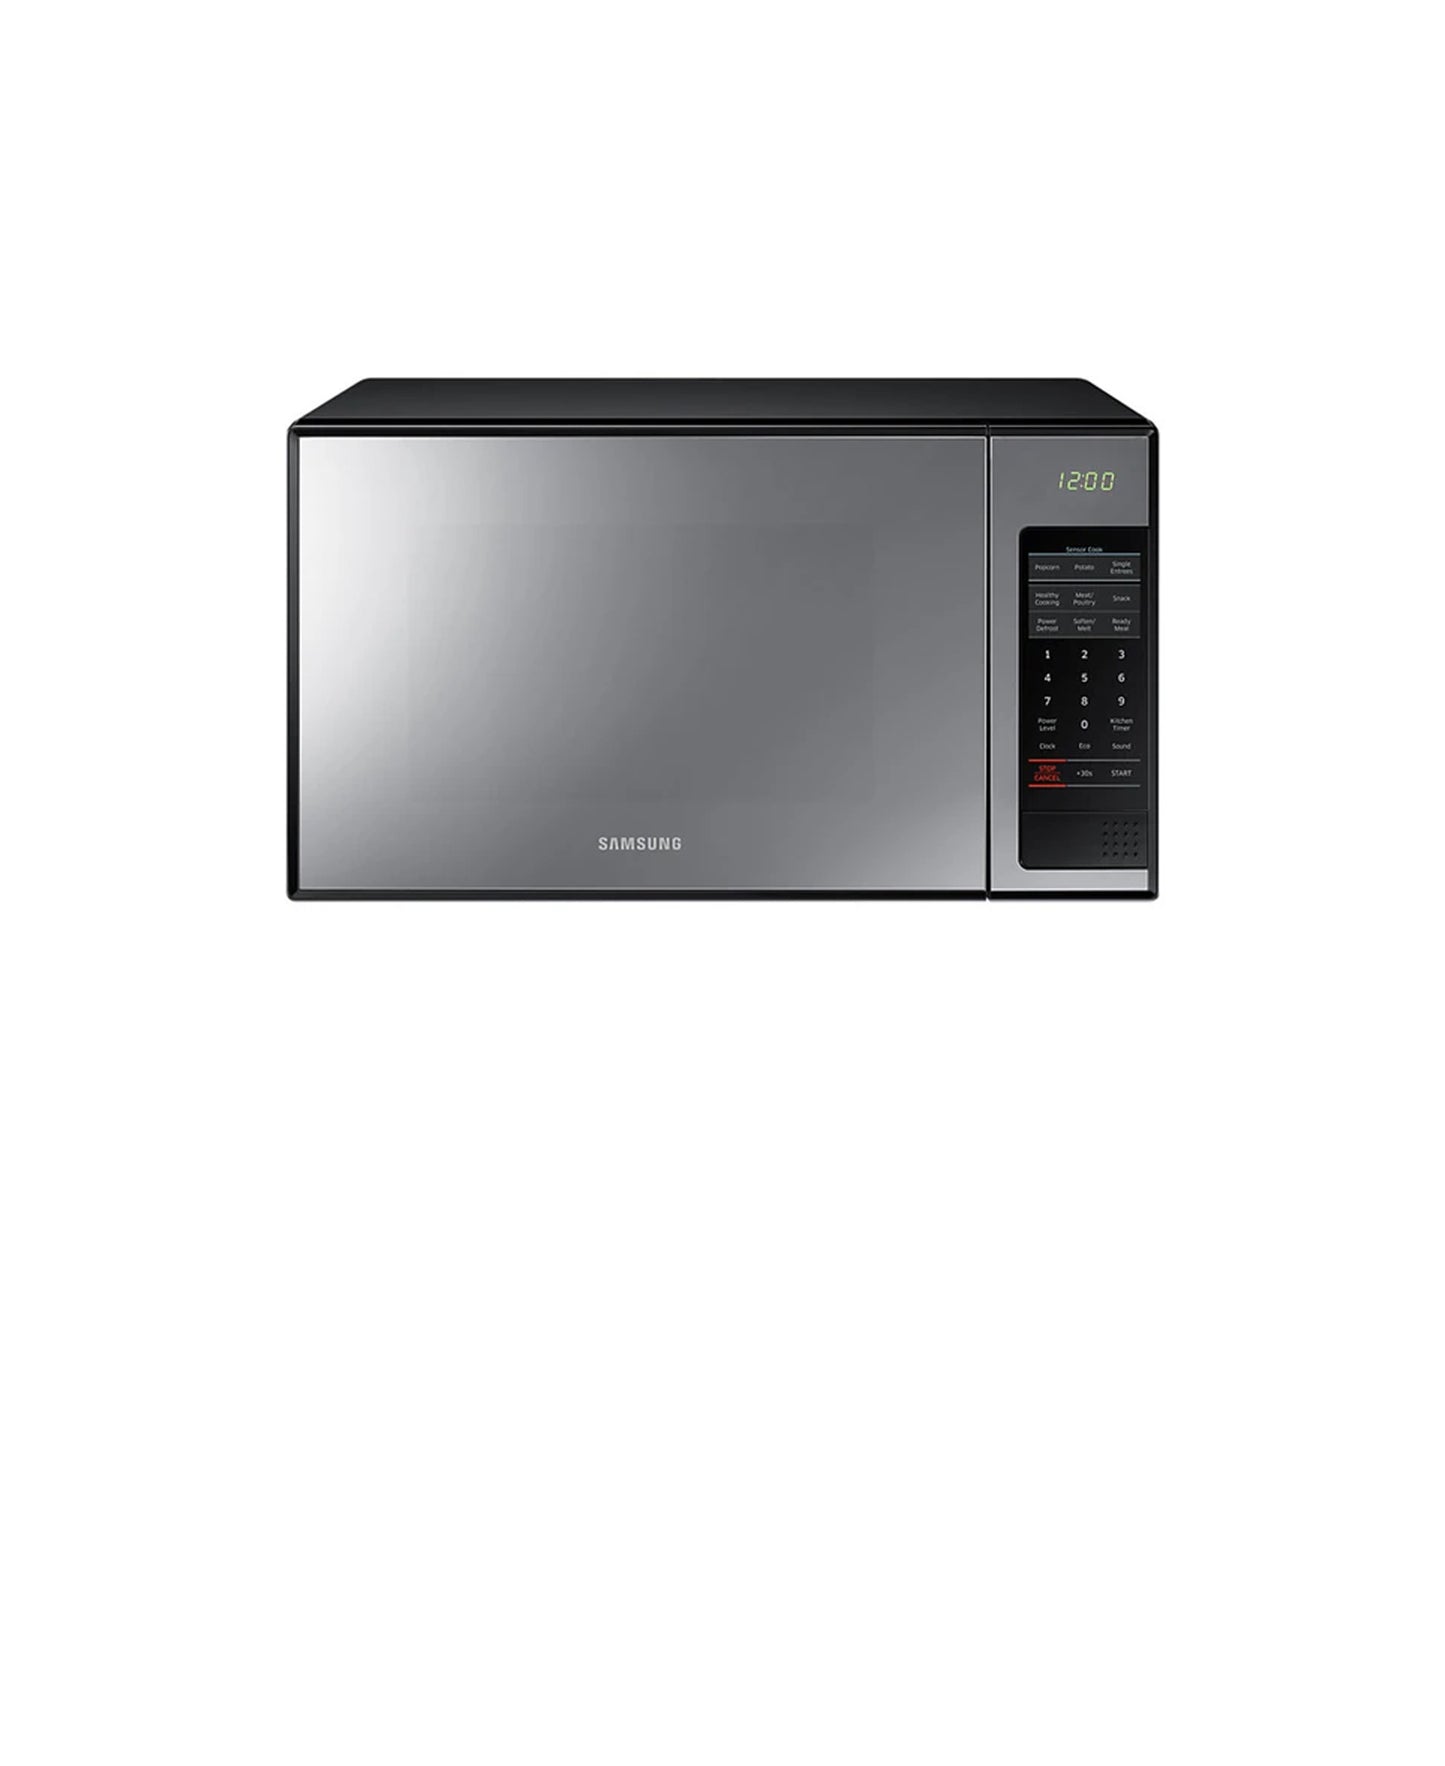 Samsung 32L Solo Microwave Silver - ME0113M1